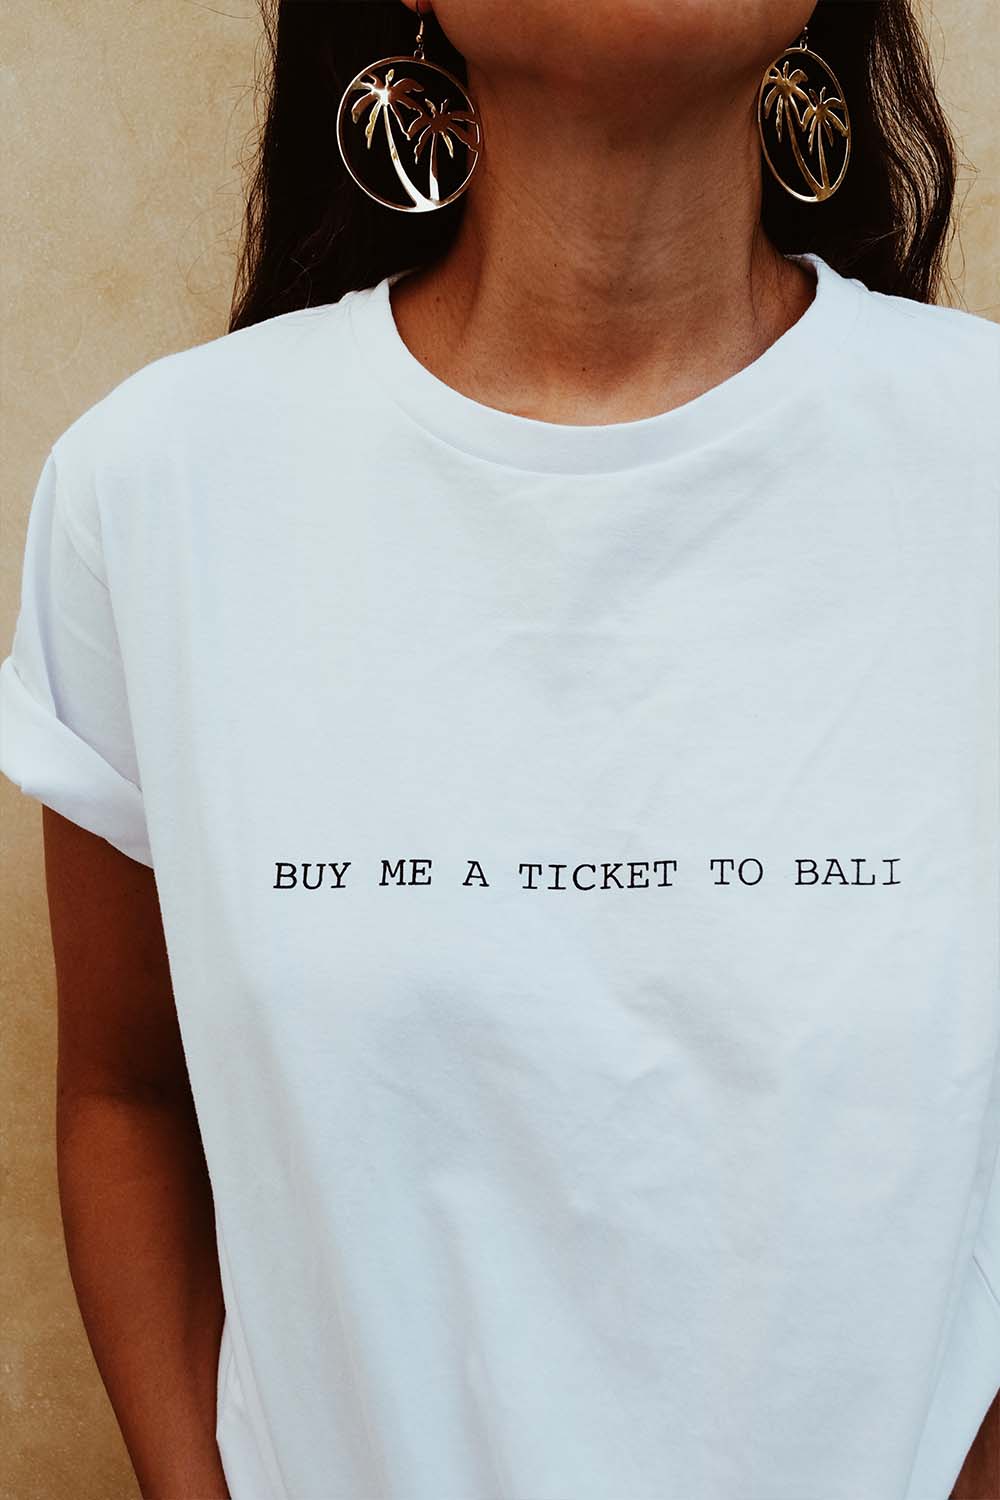 A Ticket to Bali T-shirt